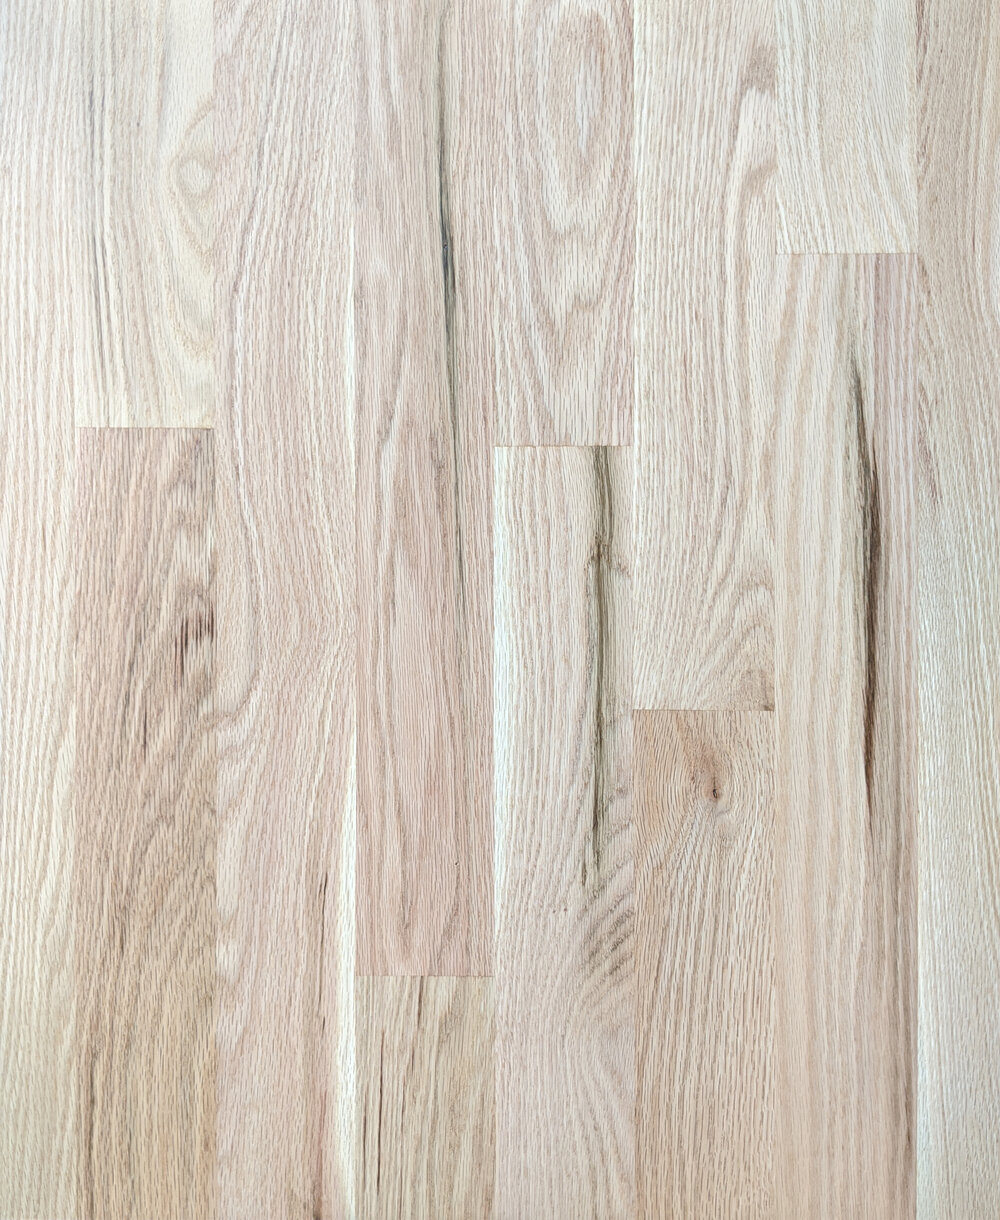 Unfinished Flooring Emerson Hardwood, Mill Direct Hardwood Flooring